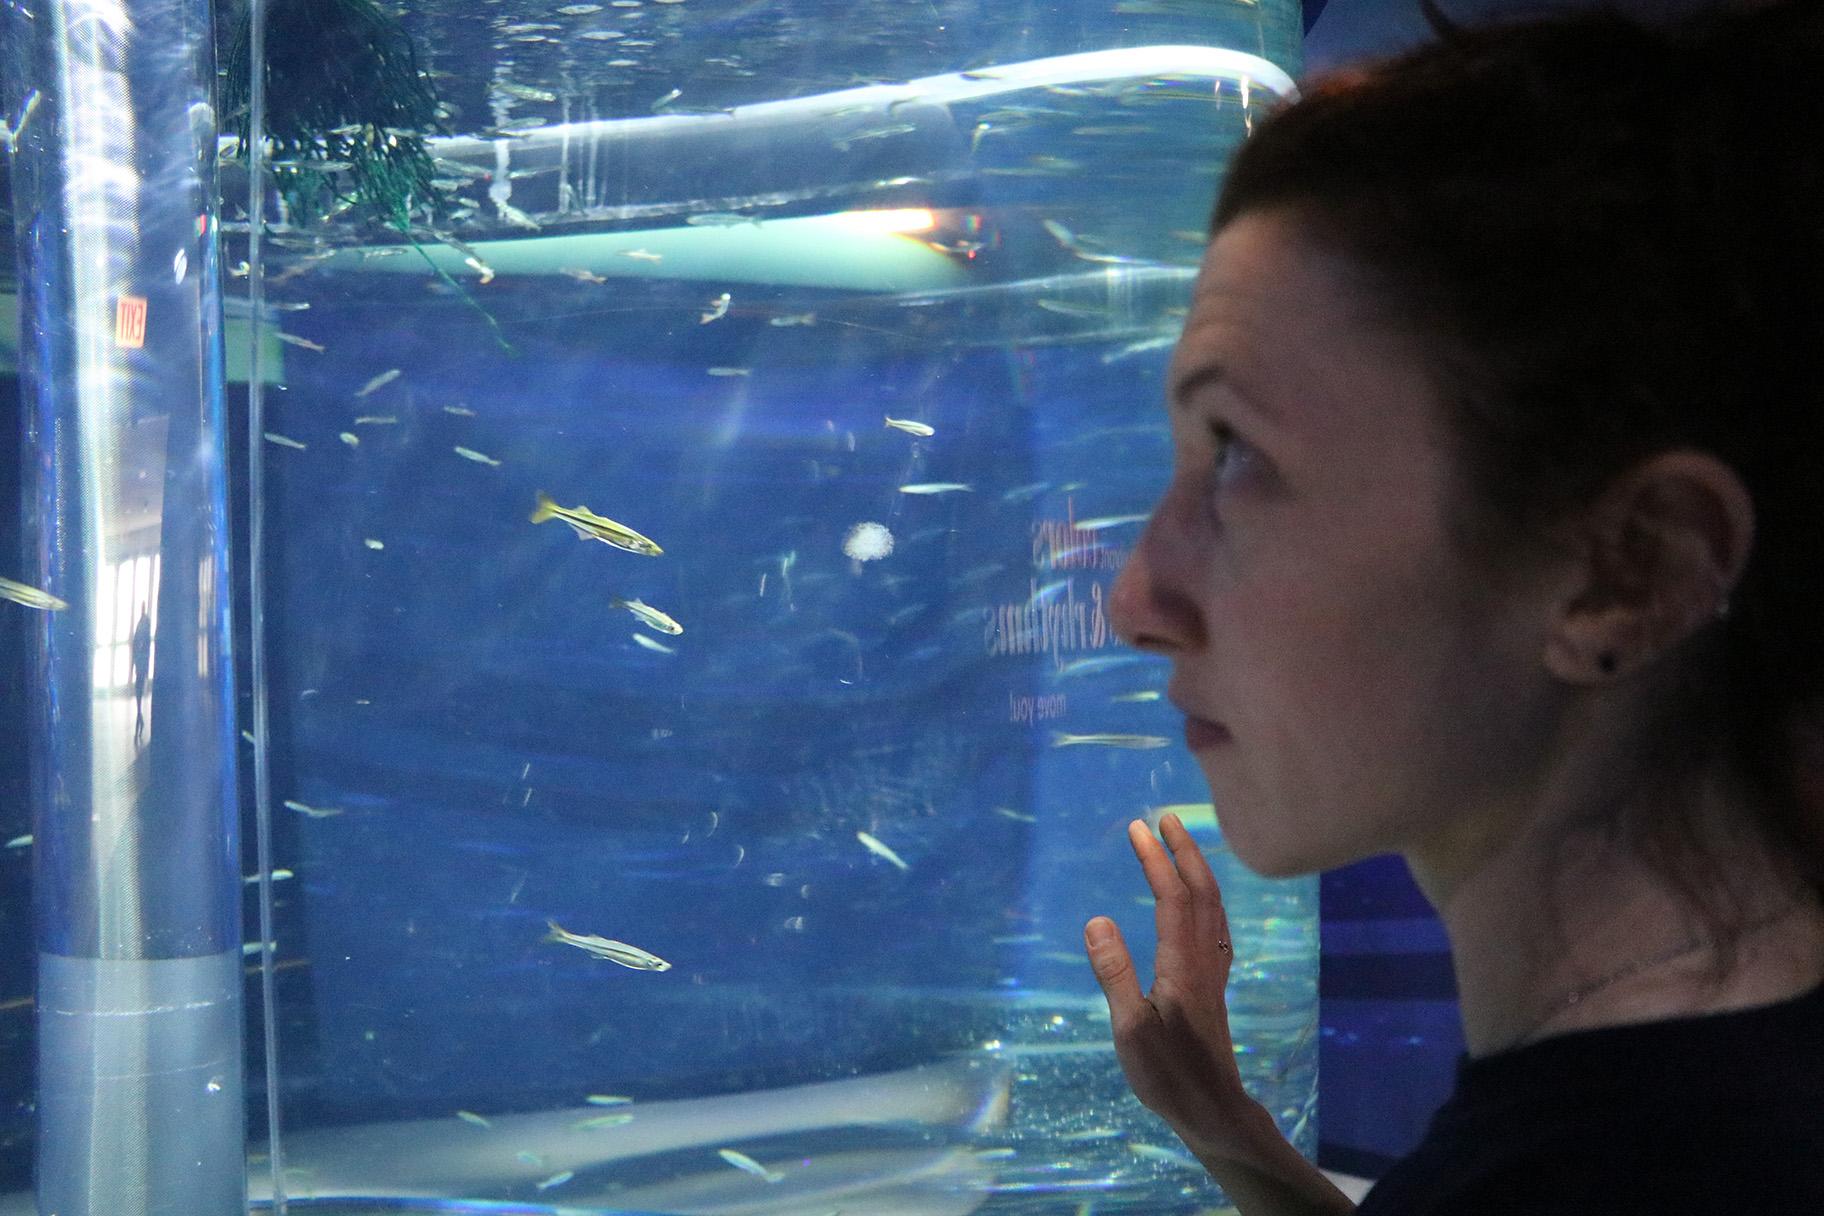 Senior aquarist Erika Moss observes silversides, schooling fish which attract many predators. (Evan Garcia / WTTW News)  